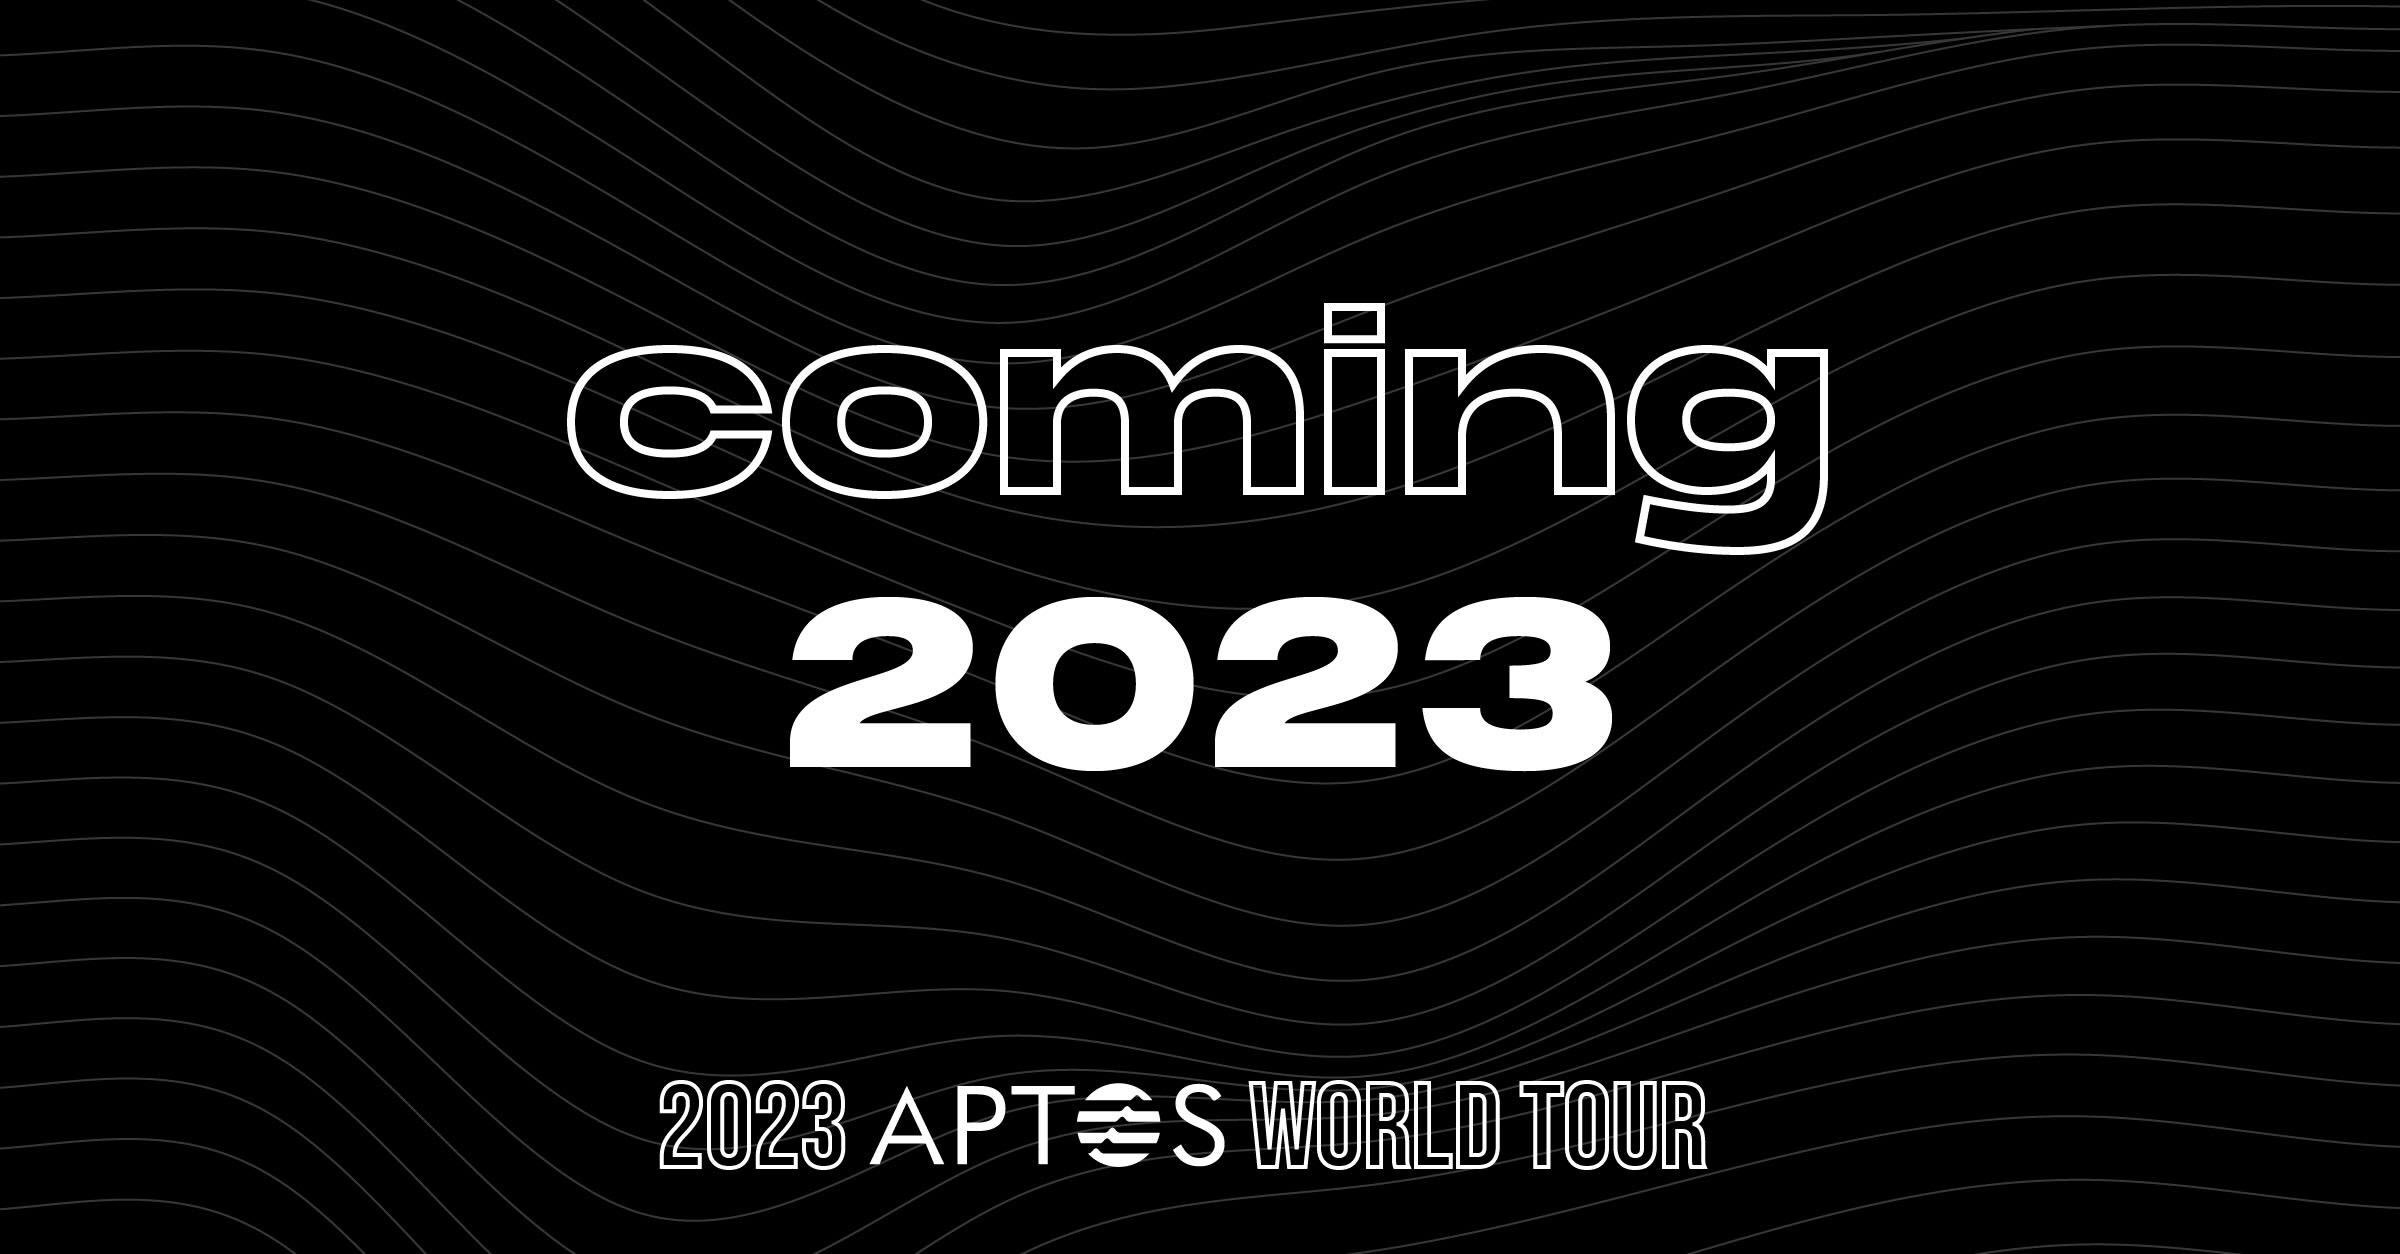 Aptos World Tour 2023 initial announcement poster artwork